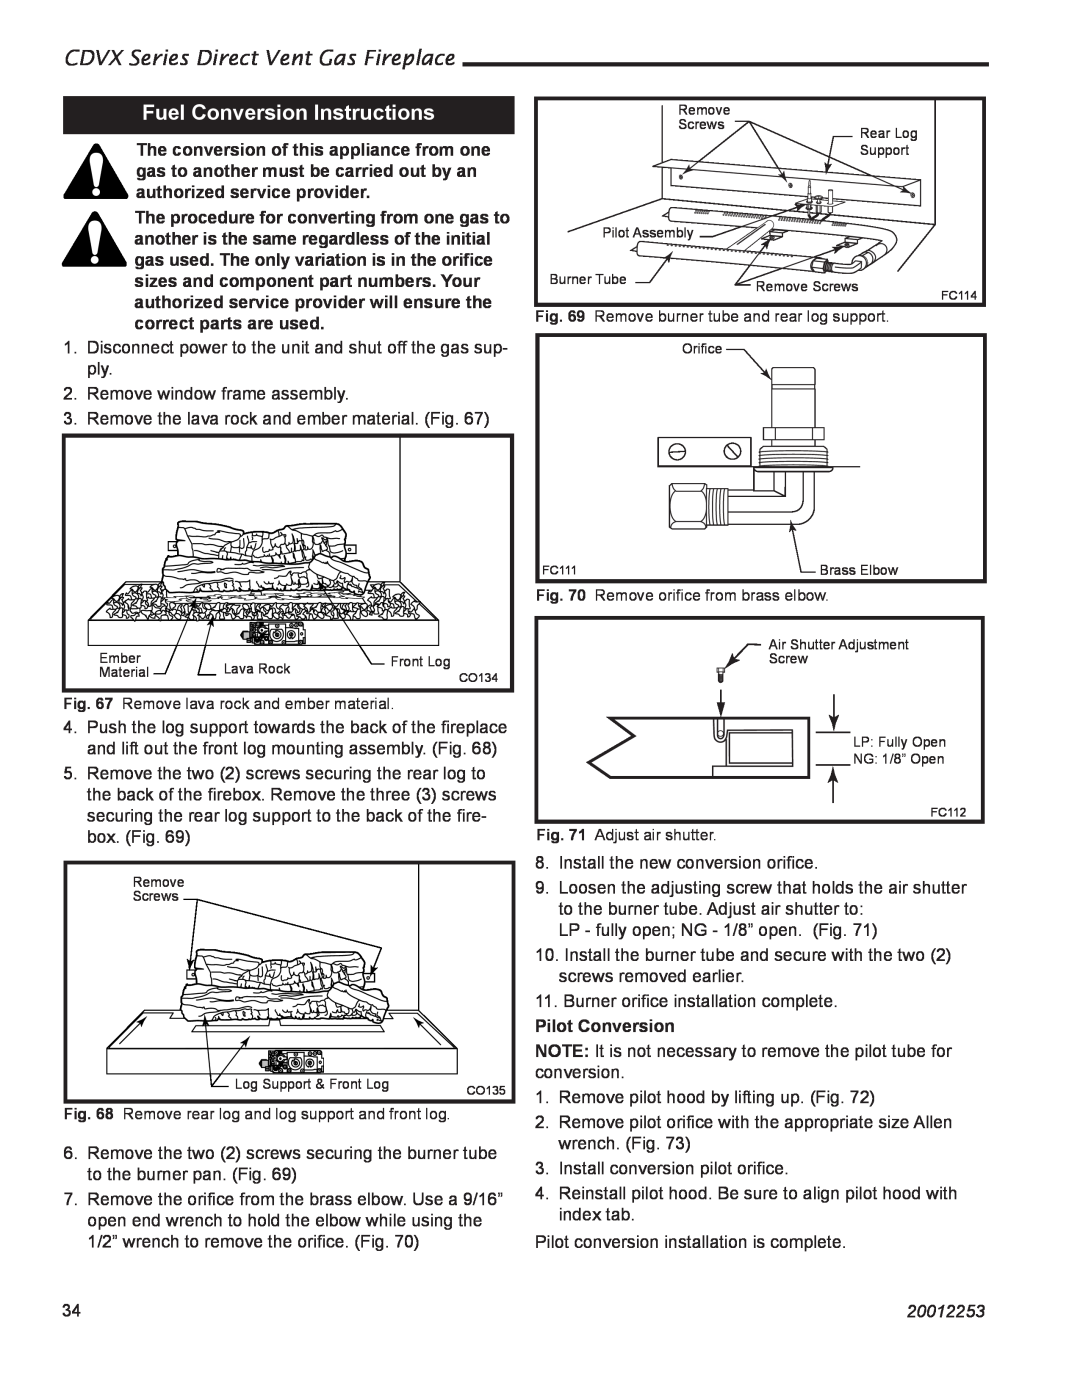 Monessen Hearth 36CDVXTRN Fuel Conversion Instructions, CDVX Series Direct Vent Gas Fireplace, 20012253 